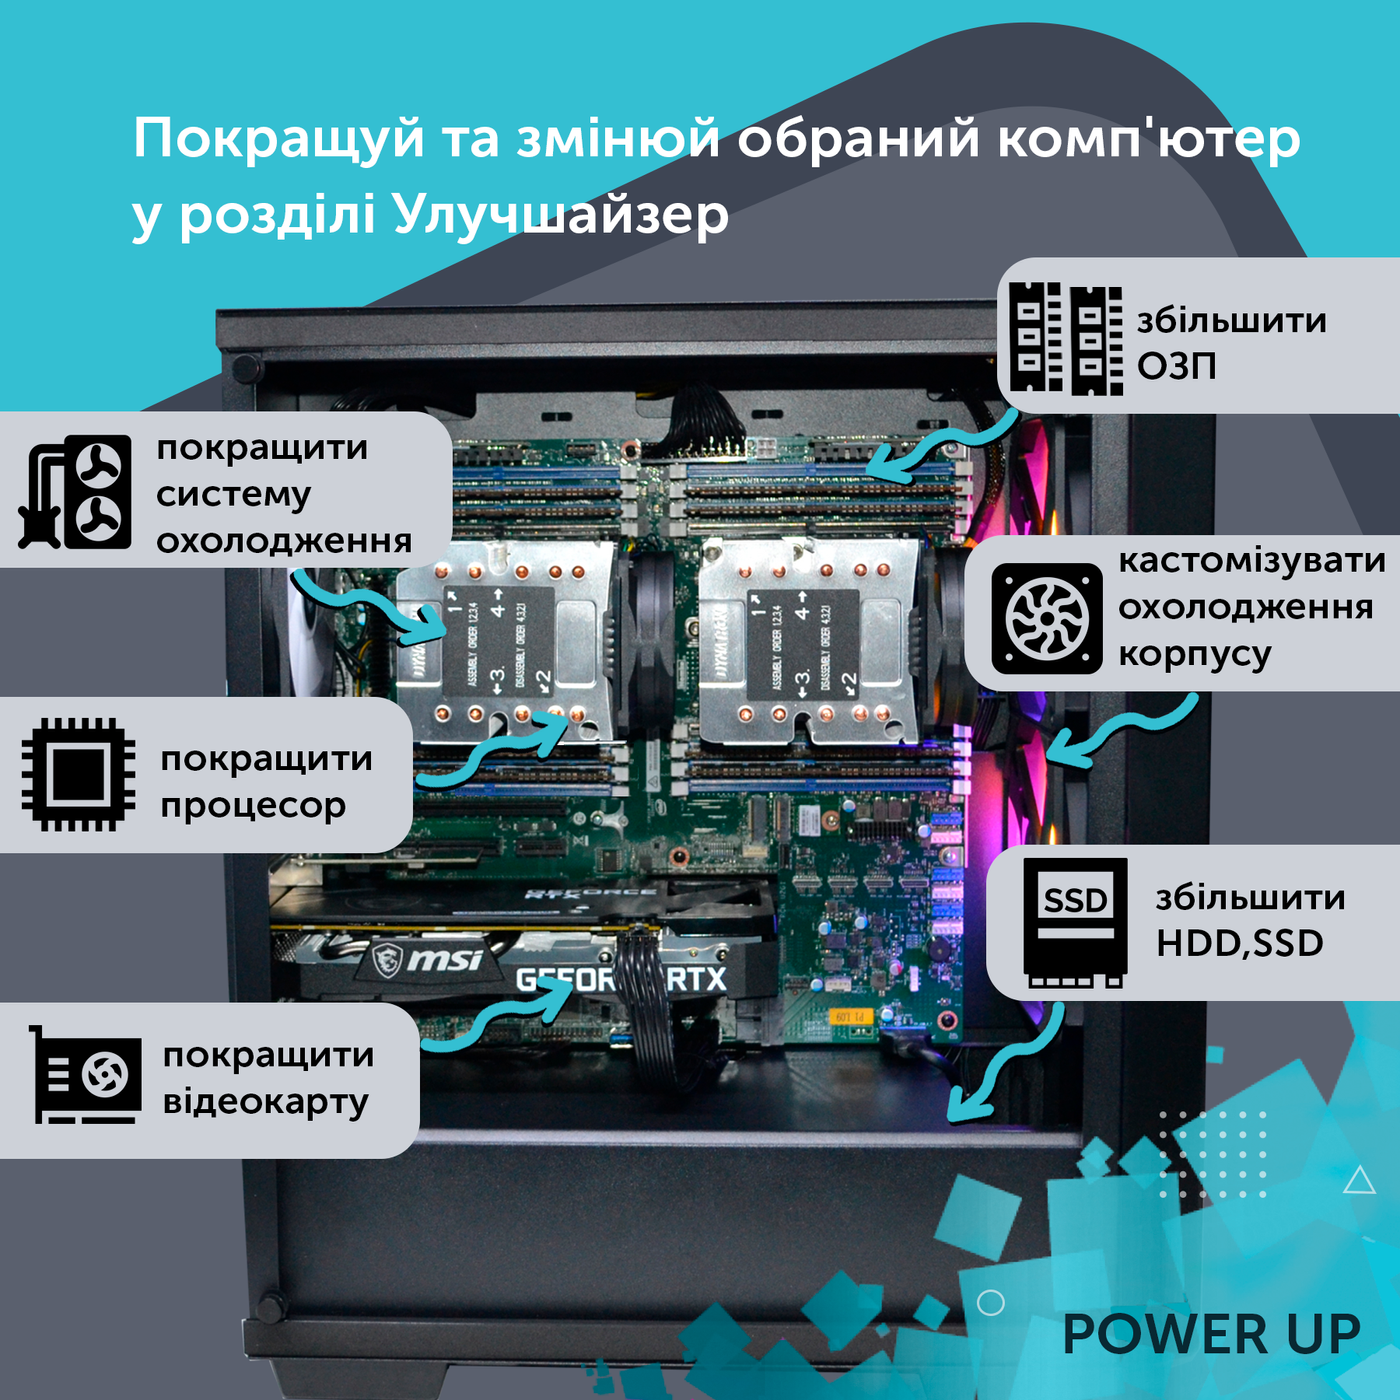 Рабочая станция PowerUp Desktop #212 Ryzen 9 7900x/64 GB/SSD 512GB/GeForce RTX 4070Ti 12GB